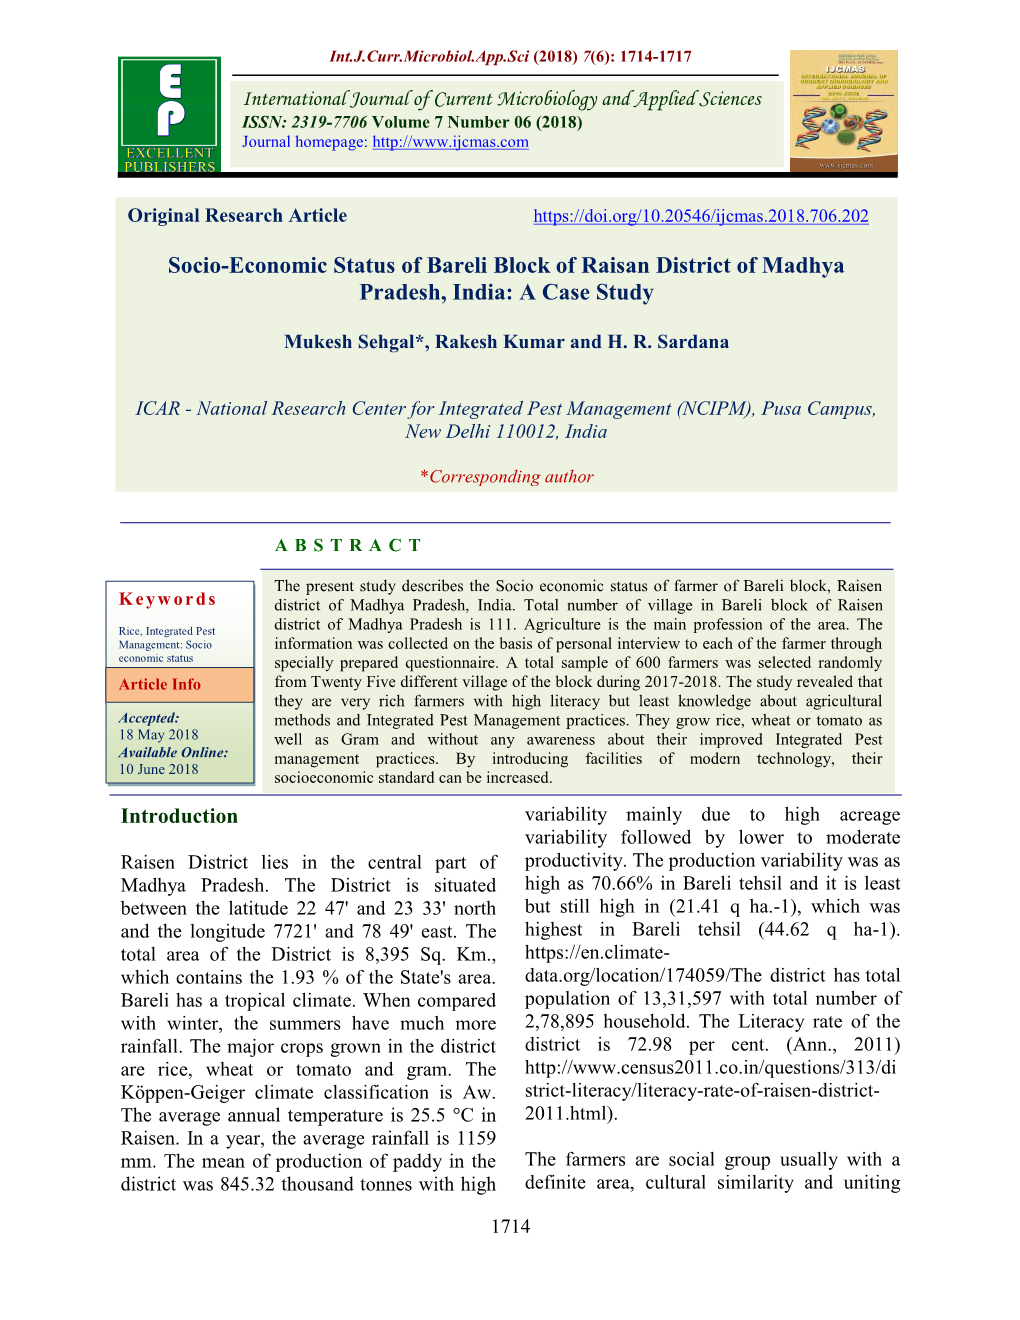 Socio-Economic Status of Bareli Block of Raisan District of Madhya Pradesh, India: a Case Study